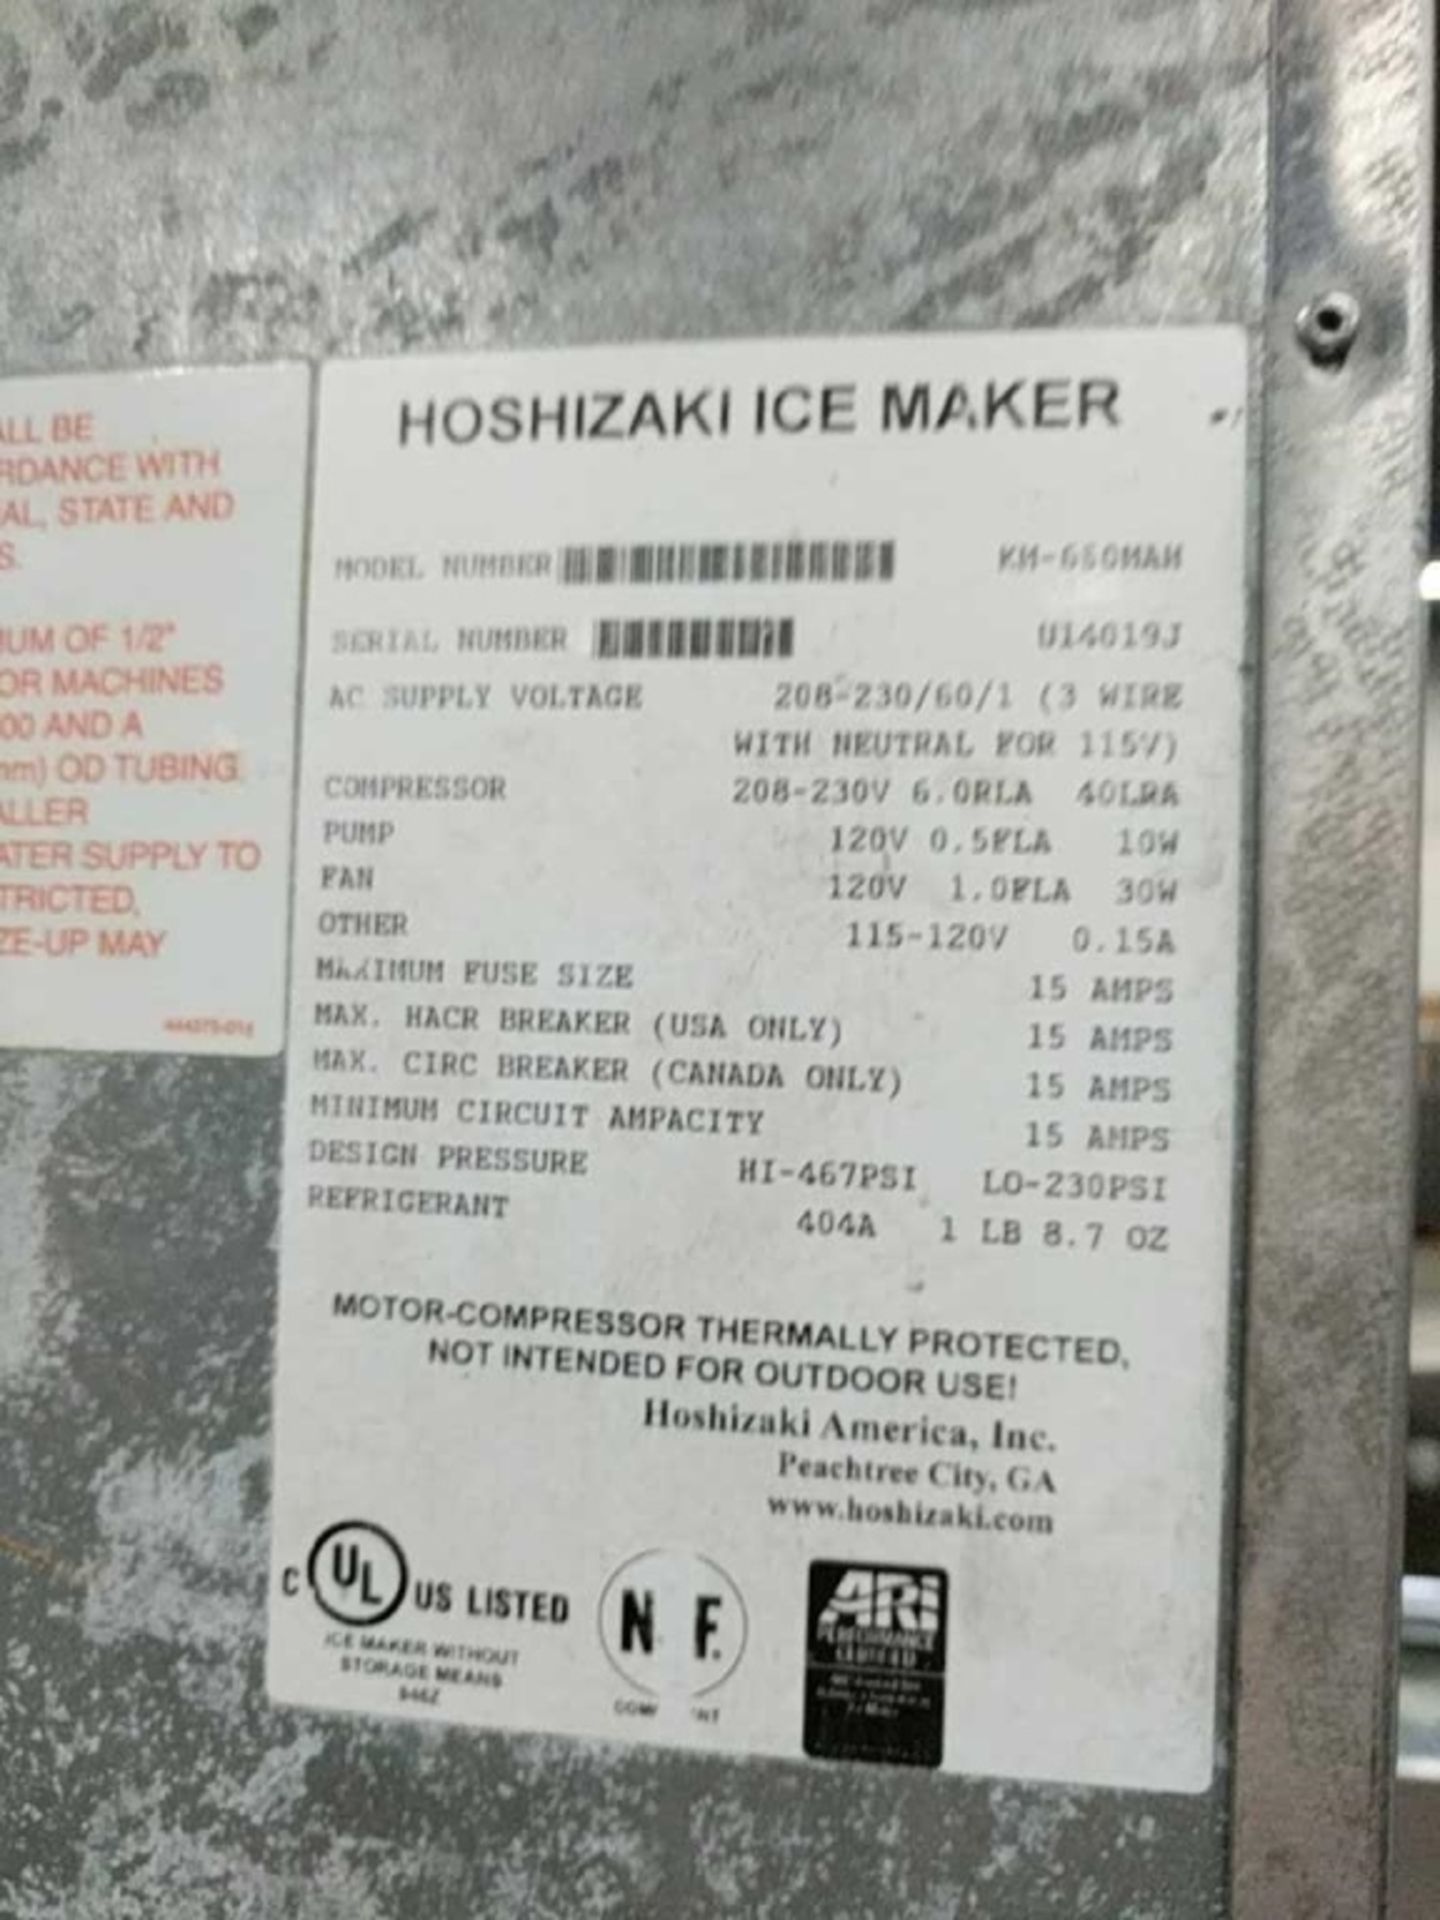 Hoshizaki KM-650MAH Ice Maker - Image 3 of 4